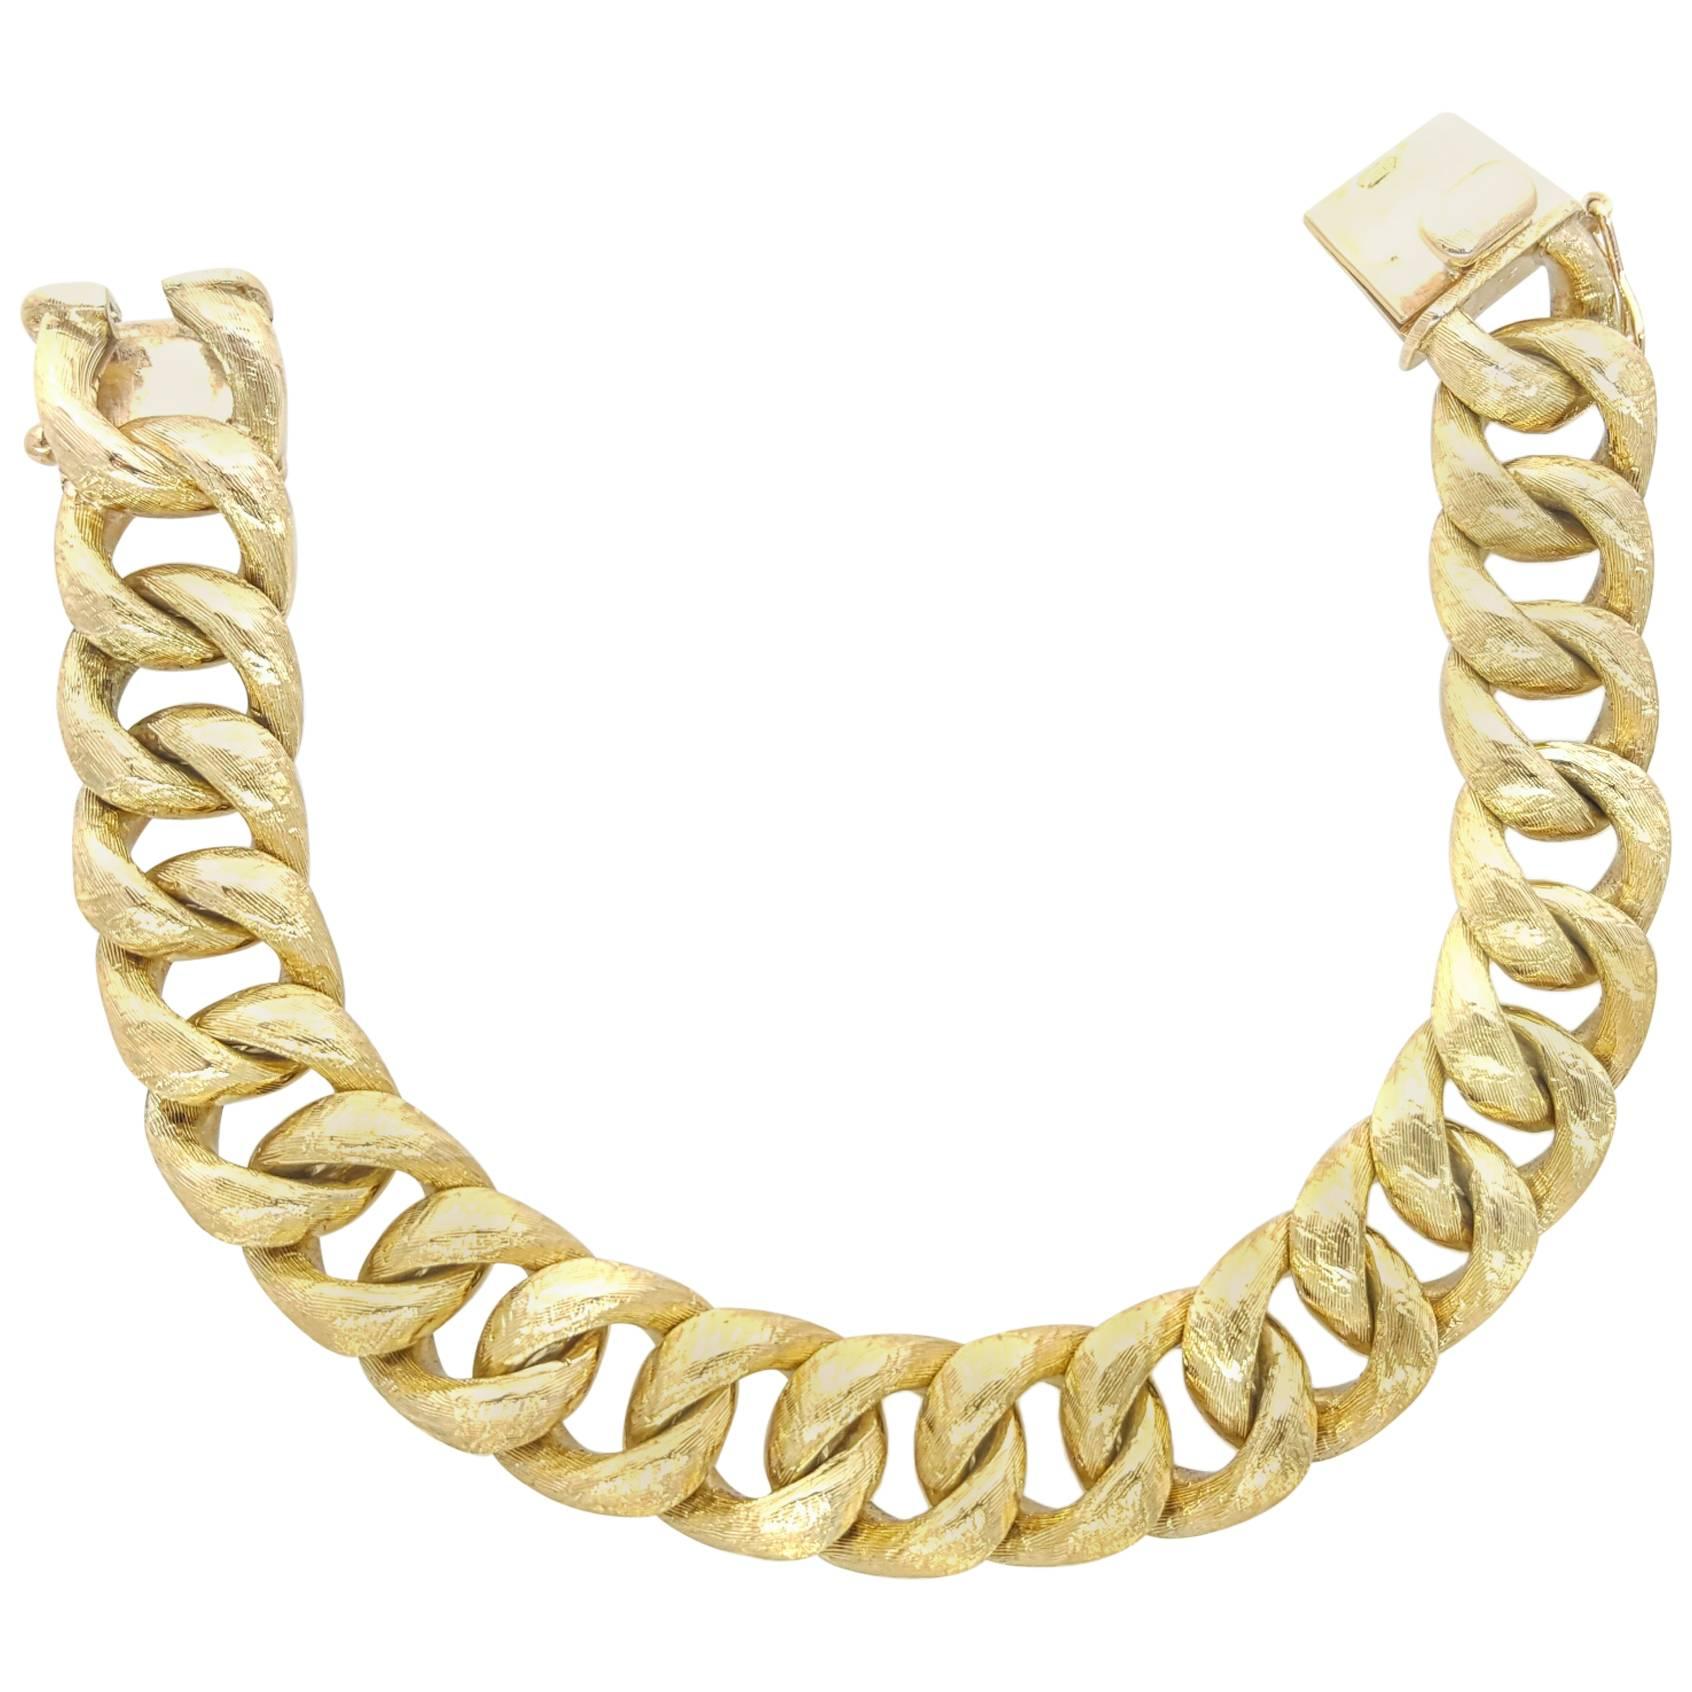 Heavy Solid Gold Curb Link Bracelet 